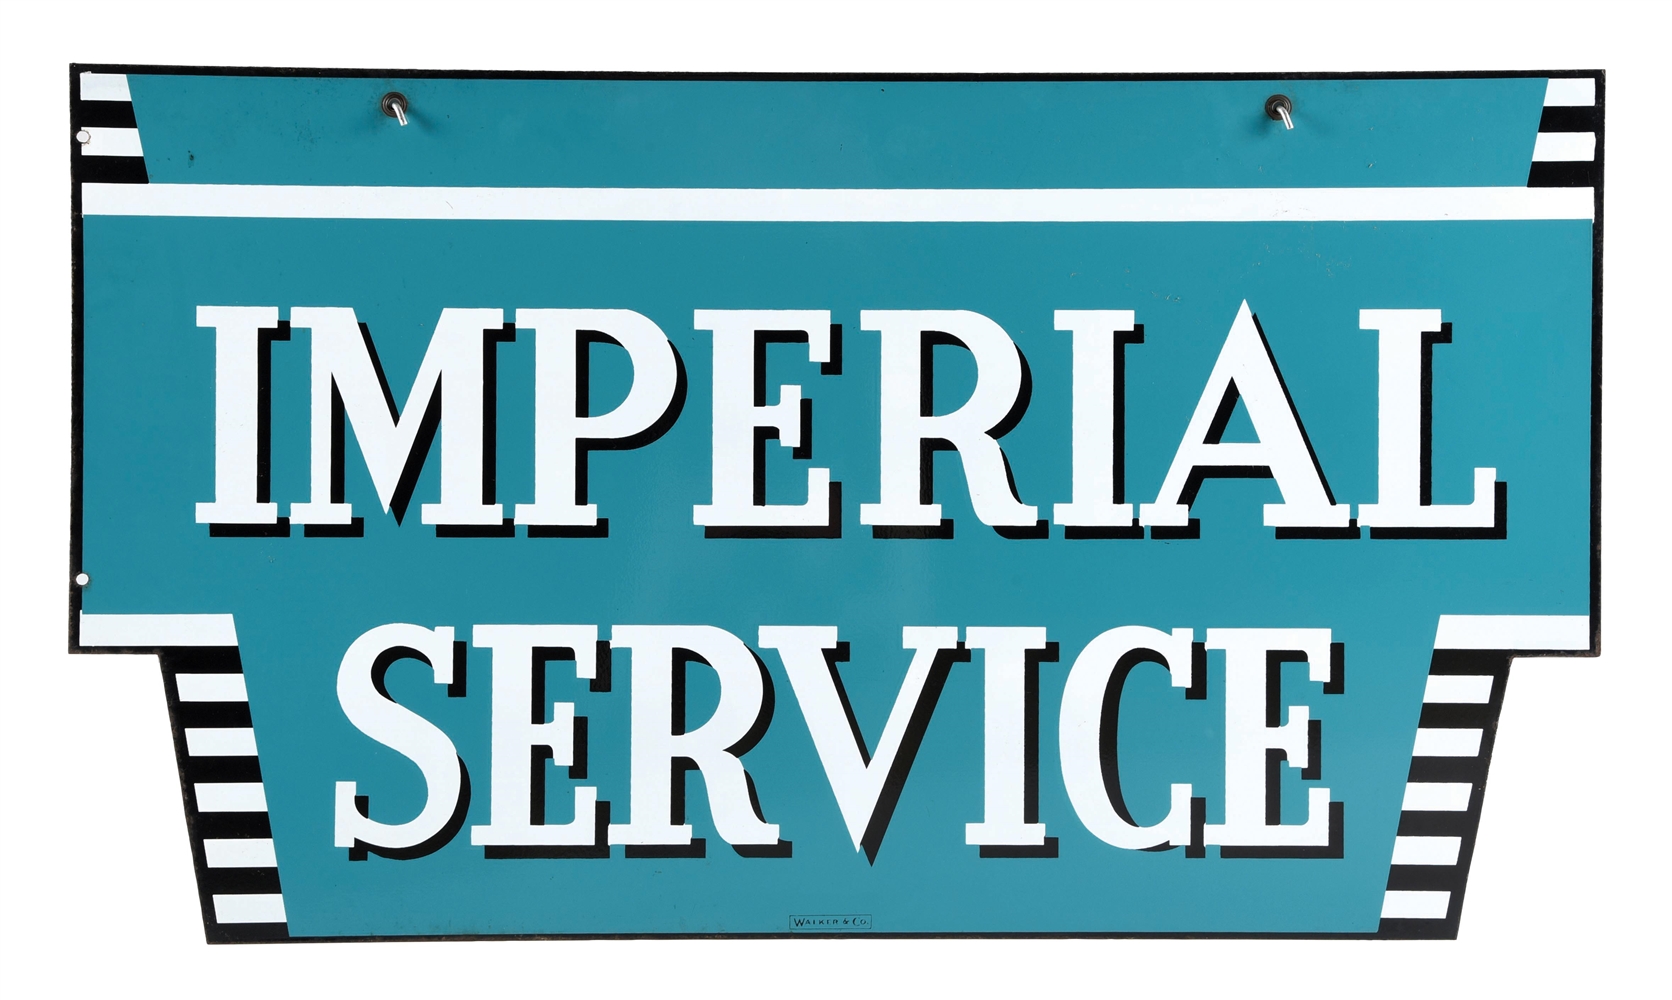 IMPERIAL SERVICE PORCELAIN SIGN.